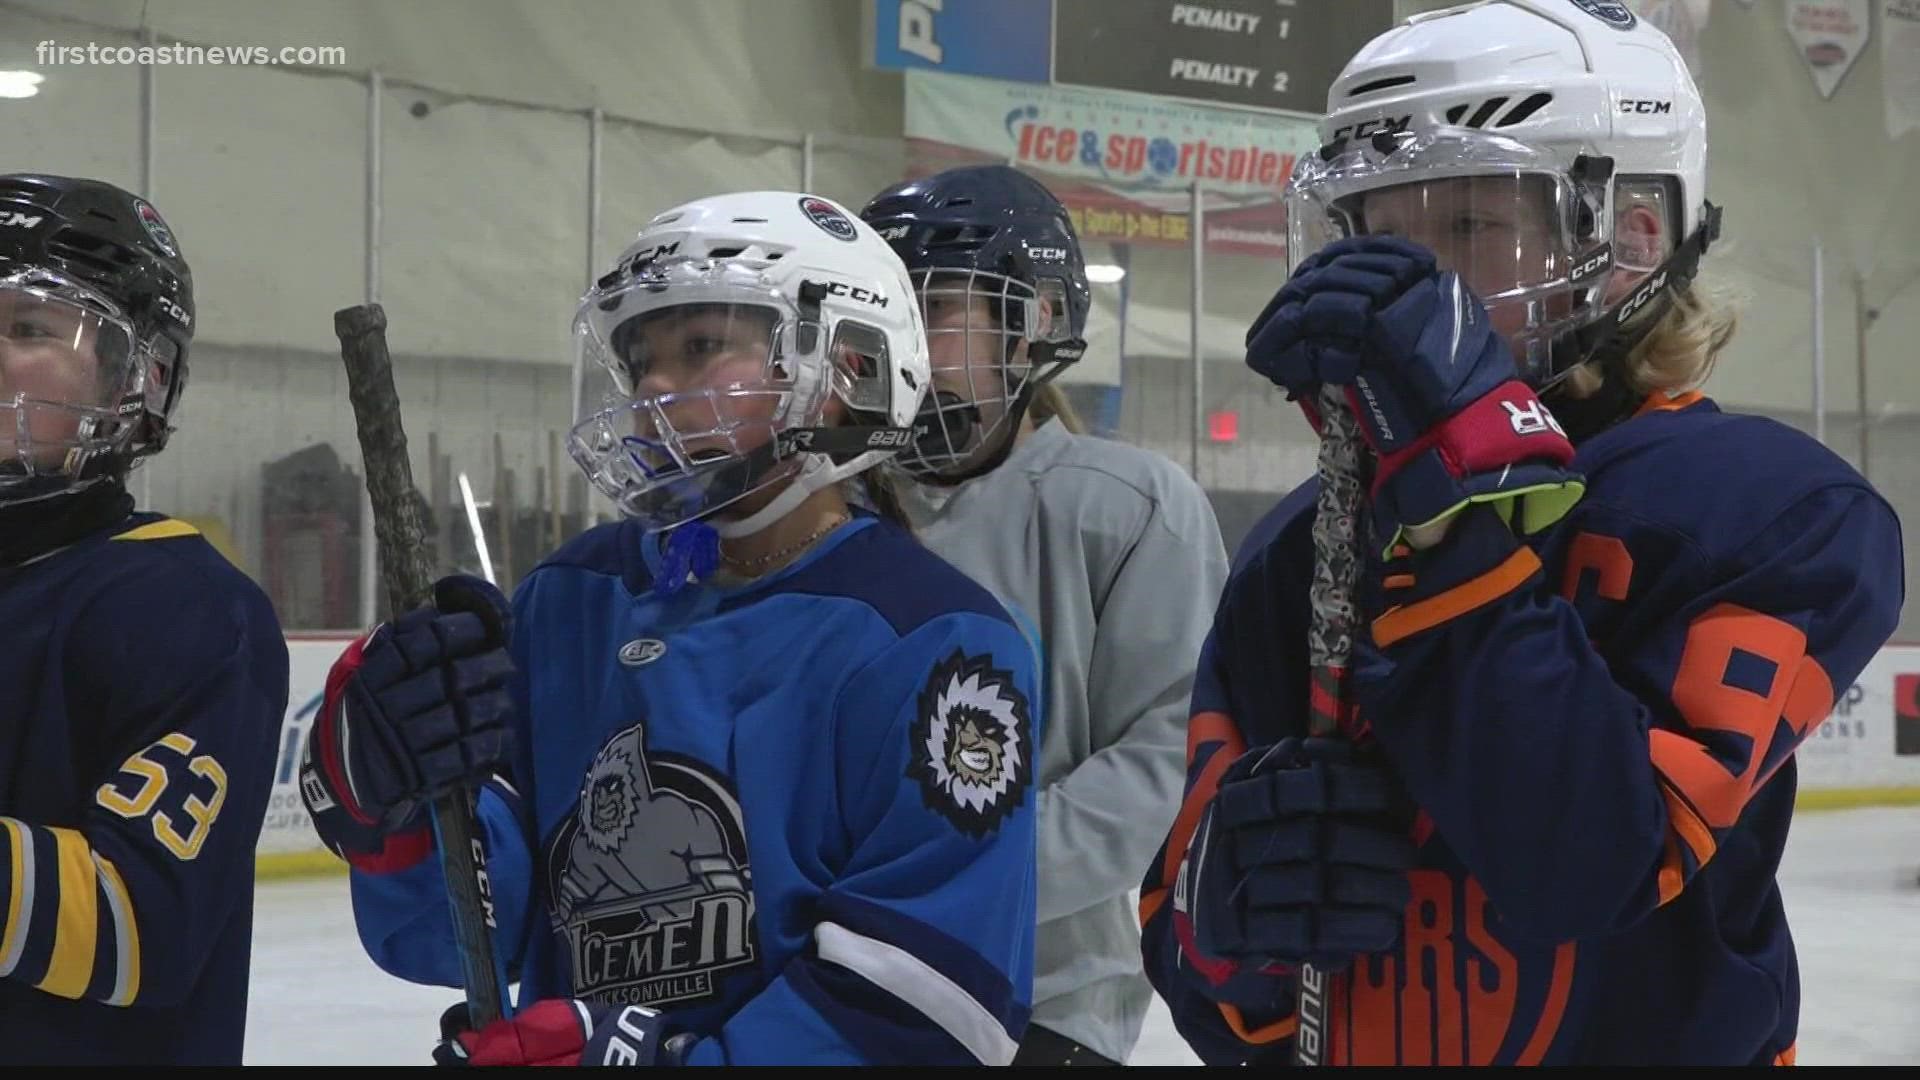 Youth hockey players inspired by Olympics firstcoastnews